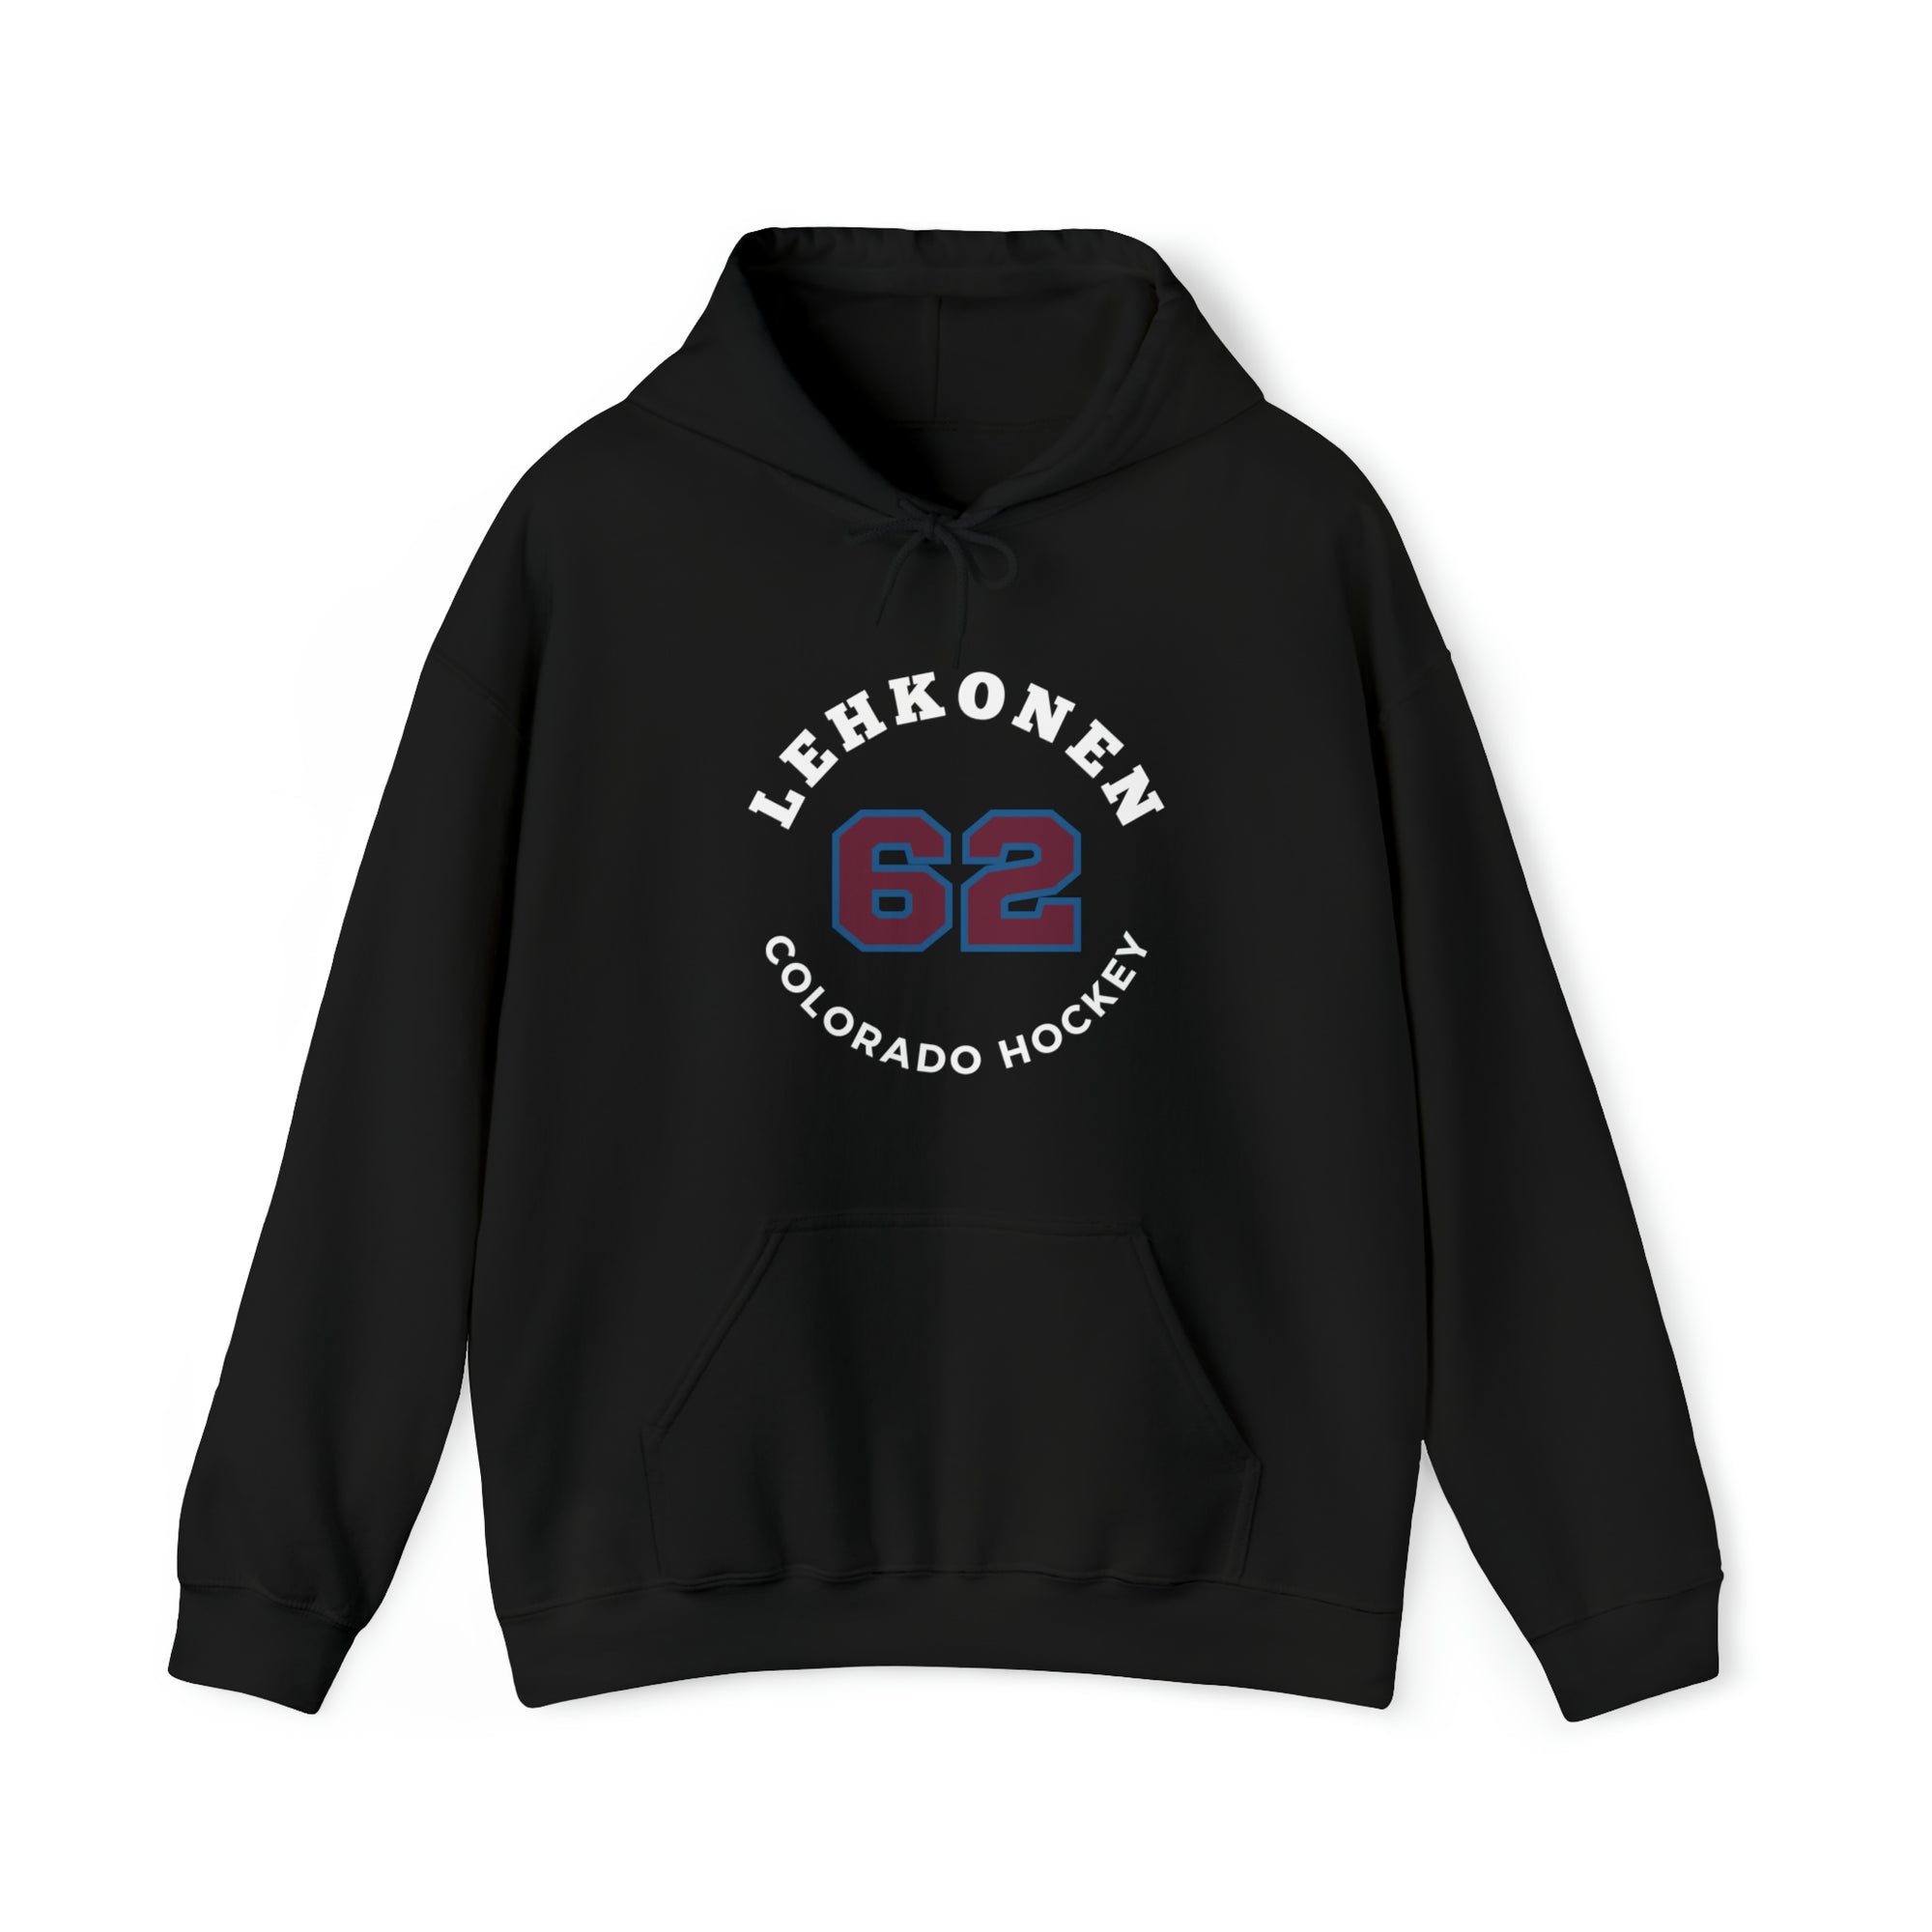 Lehkonen 62 Colorado Hockey Number Arch Design Unisex Hooded Sweatshirt